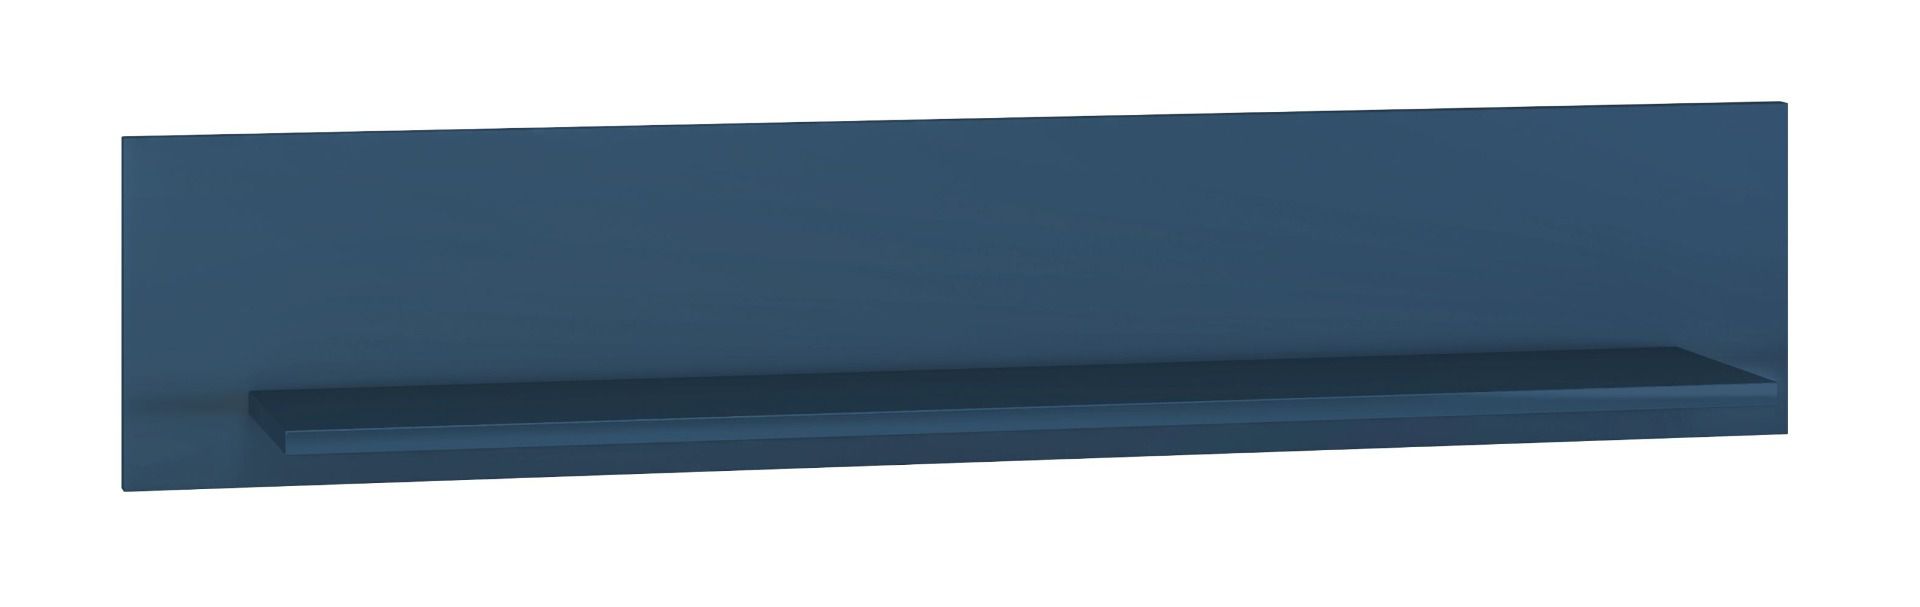 wandrek / hangplank Kumpula 08, kleur: Donkerblauw - afmetingen: 23 x 120 x 22 cm (H x B x D)